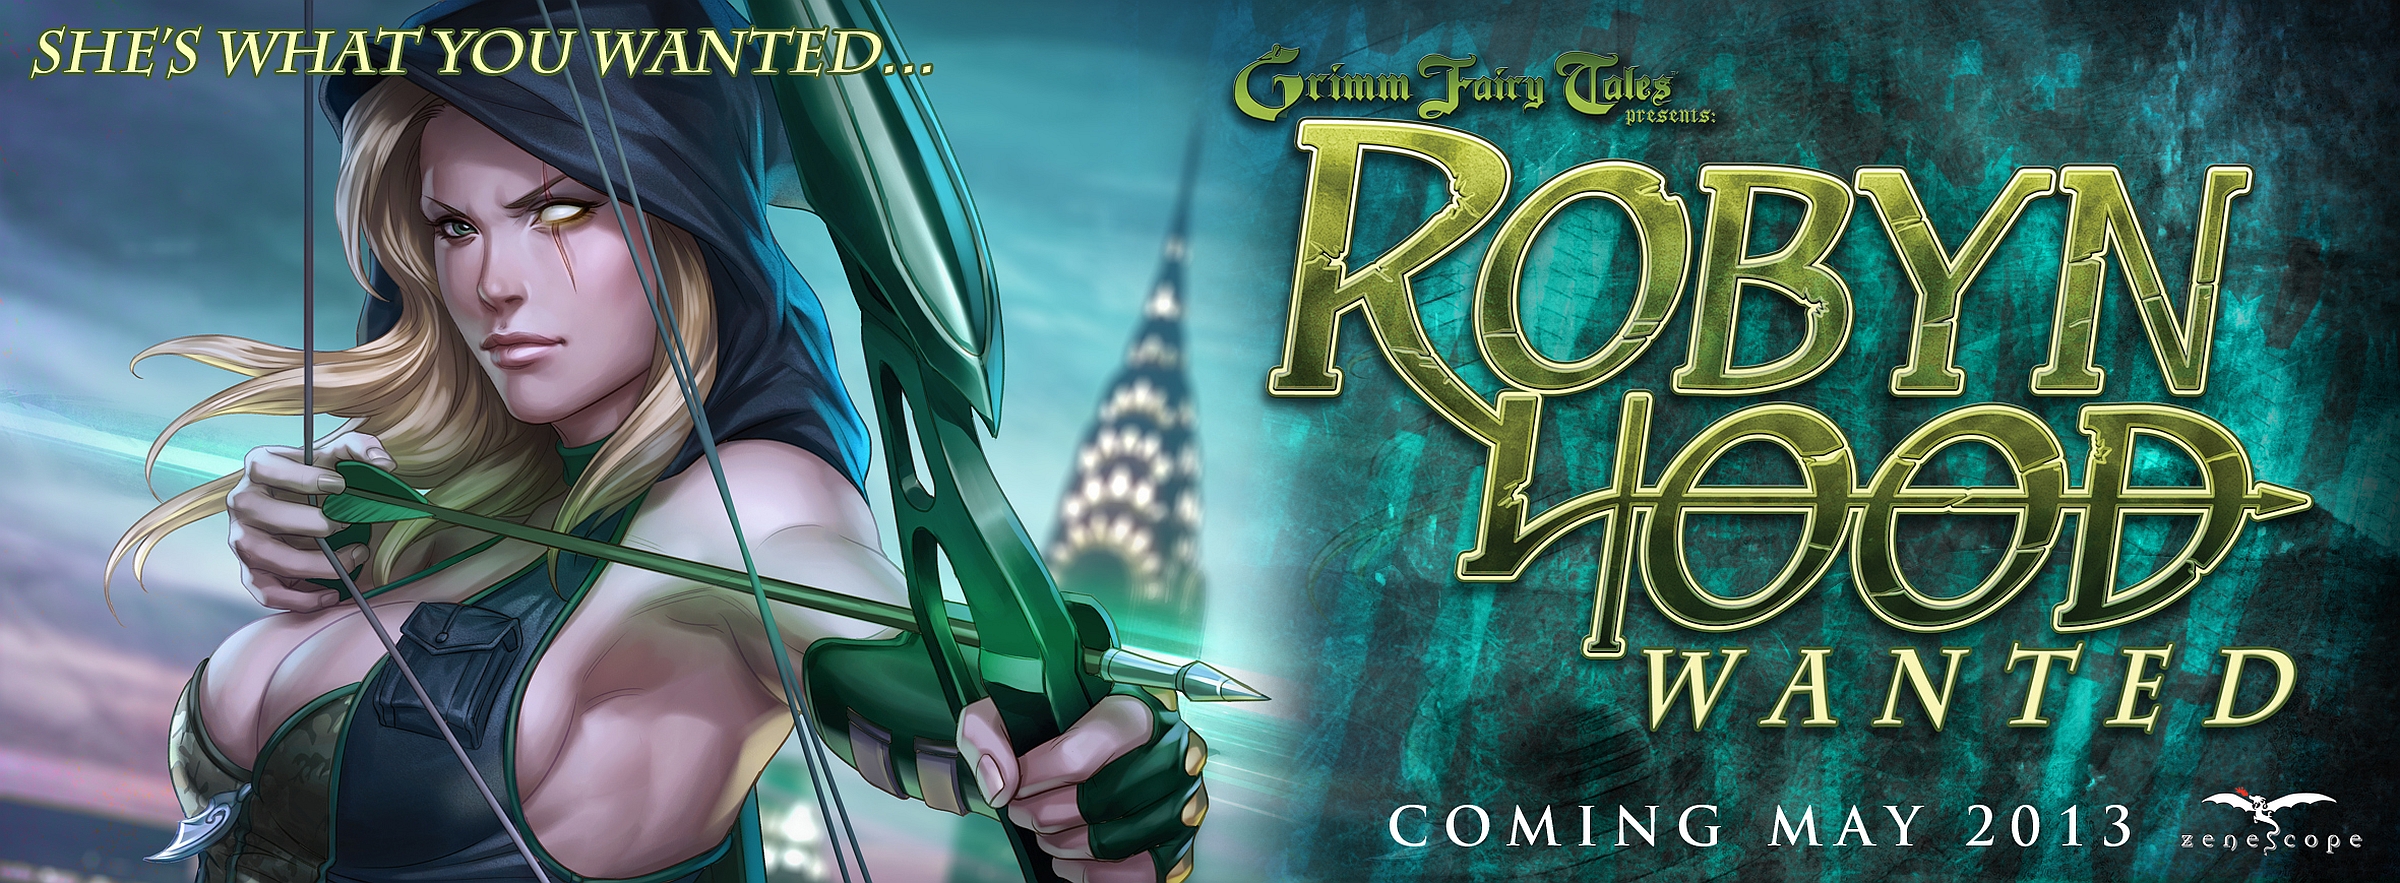 Grimm Fairy Tales: Robyn Hood Wallpaper